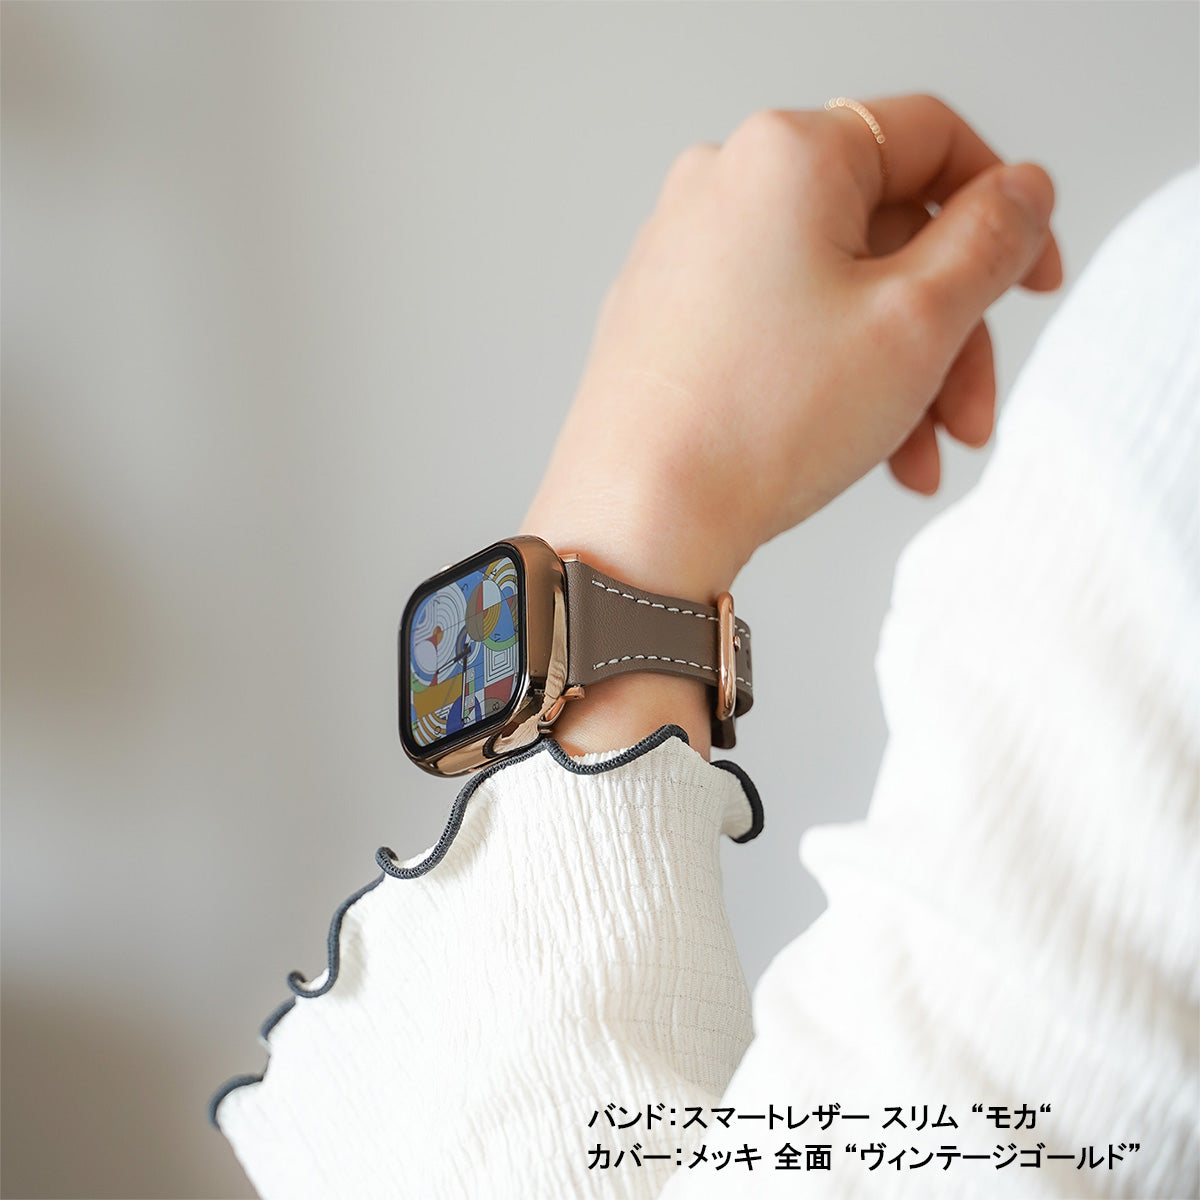 Apple Watch Series 3 24金 メッキ カスタム